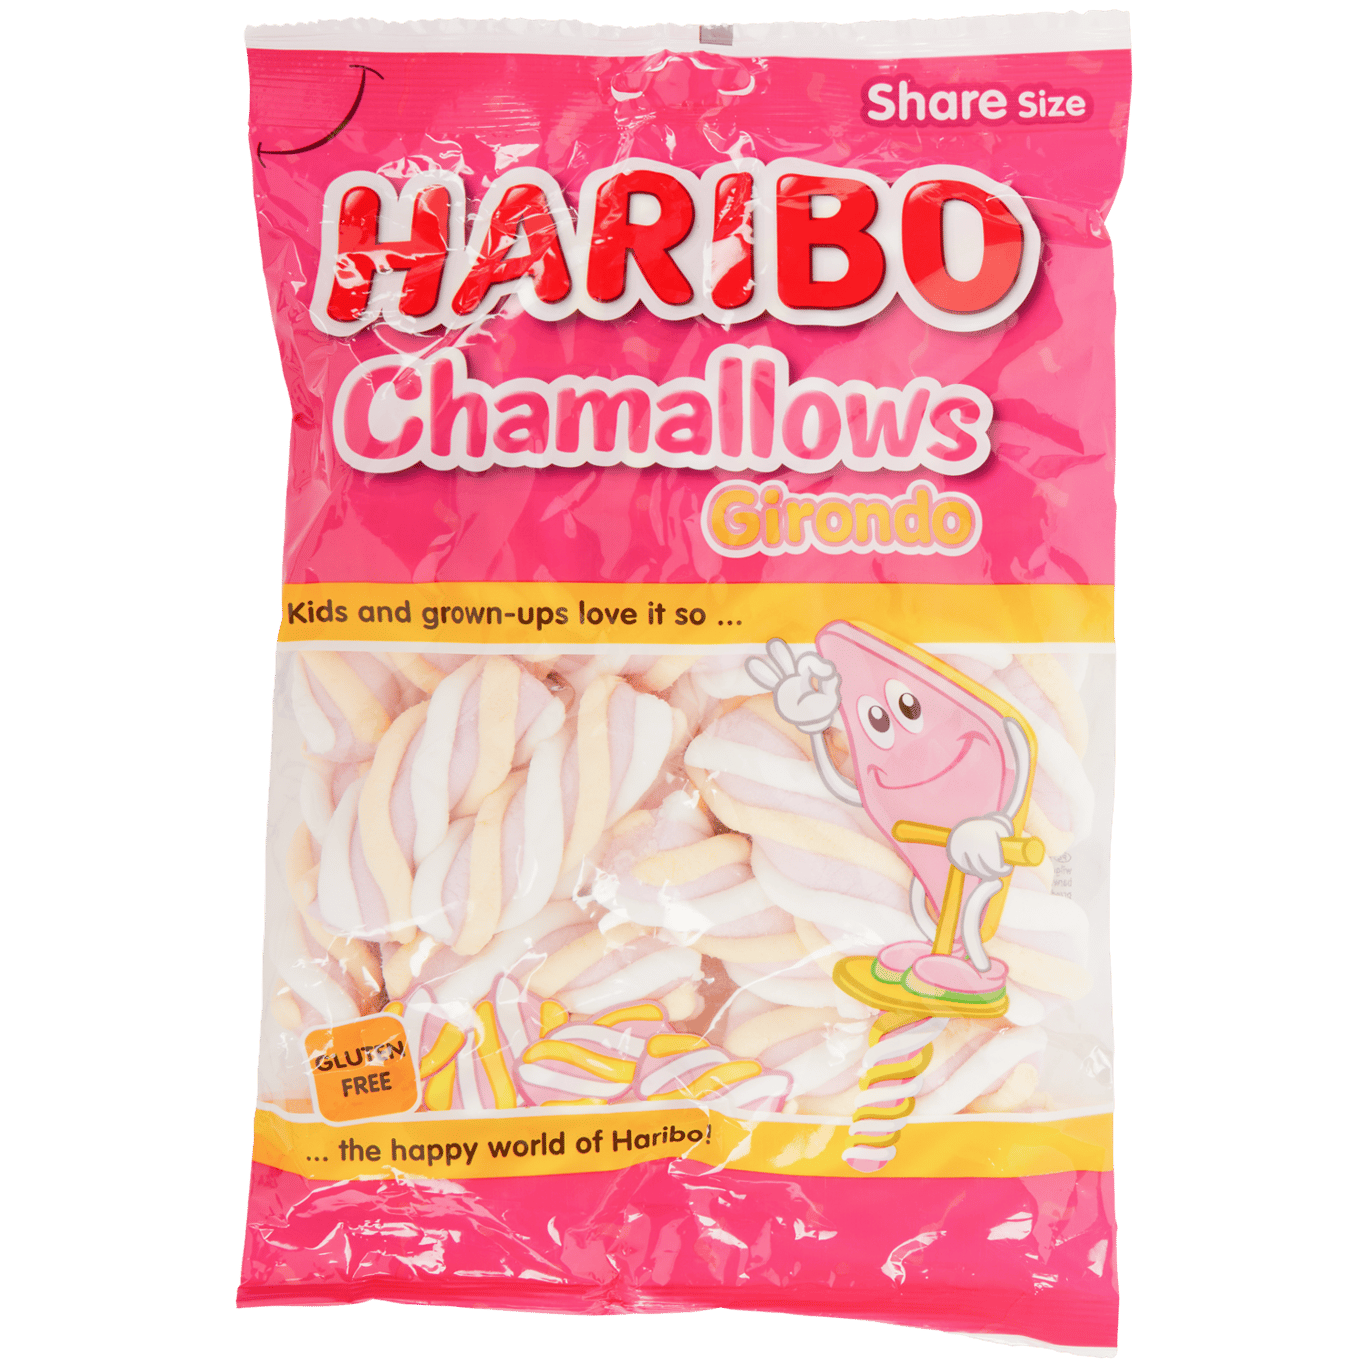 Chamallows Haribo Girondo